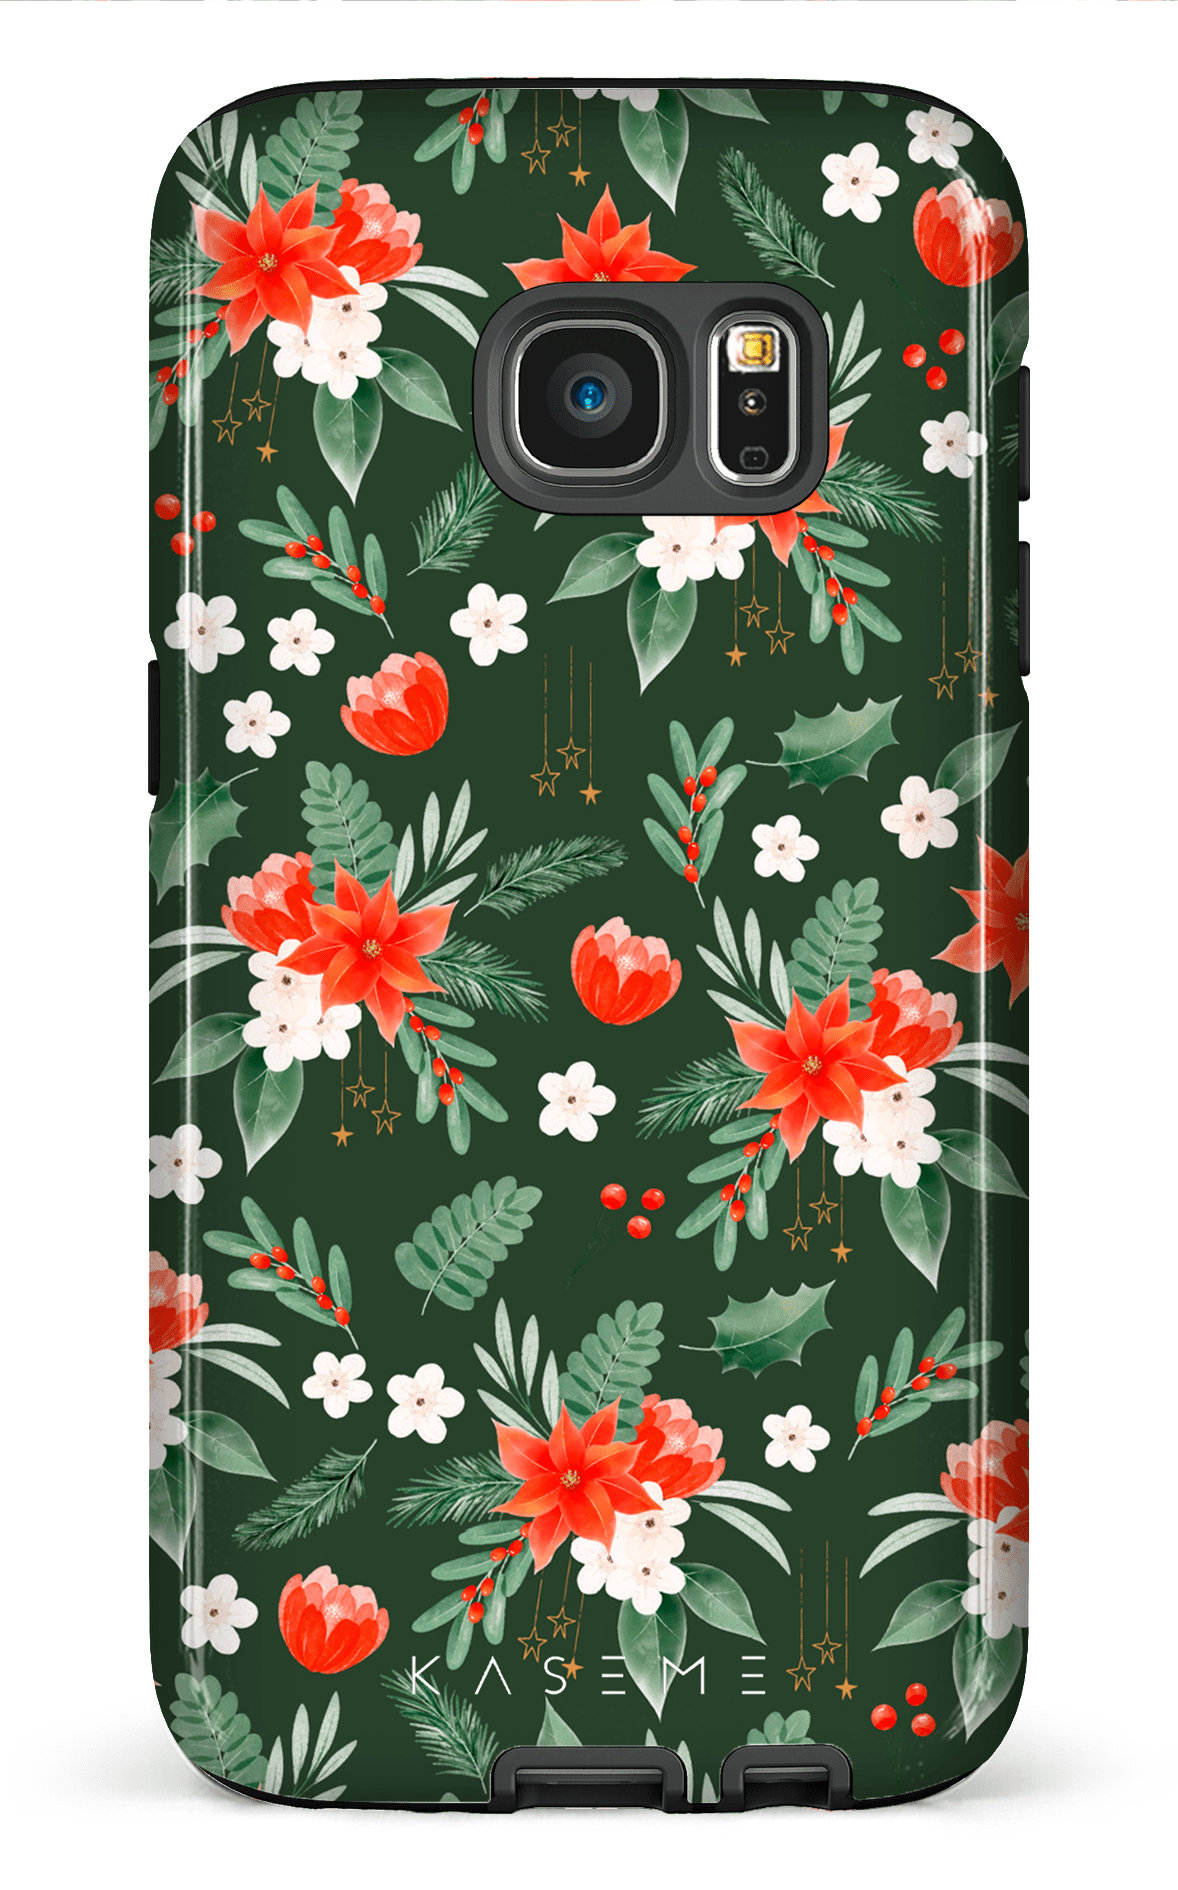 Poinsettia - Galaxy S7